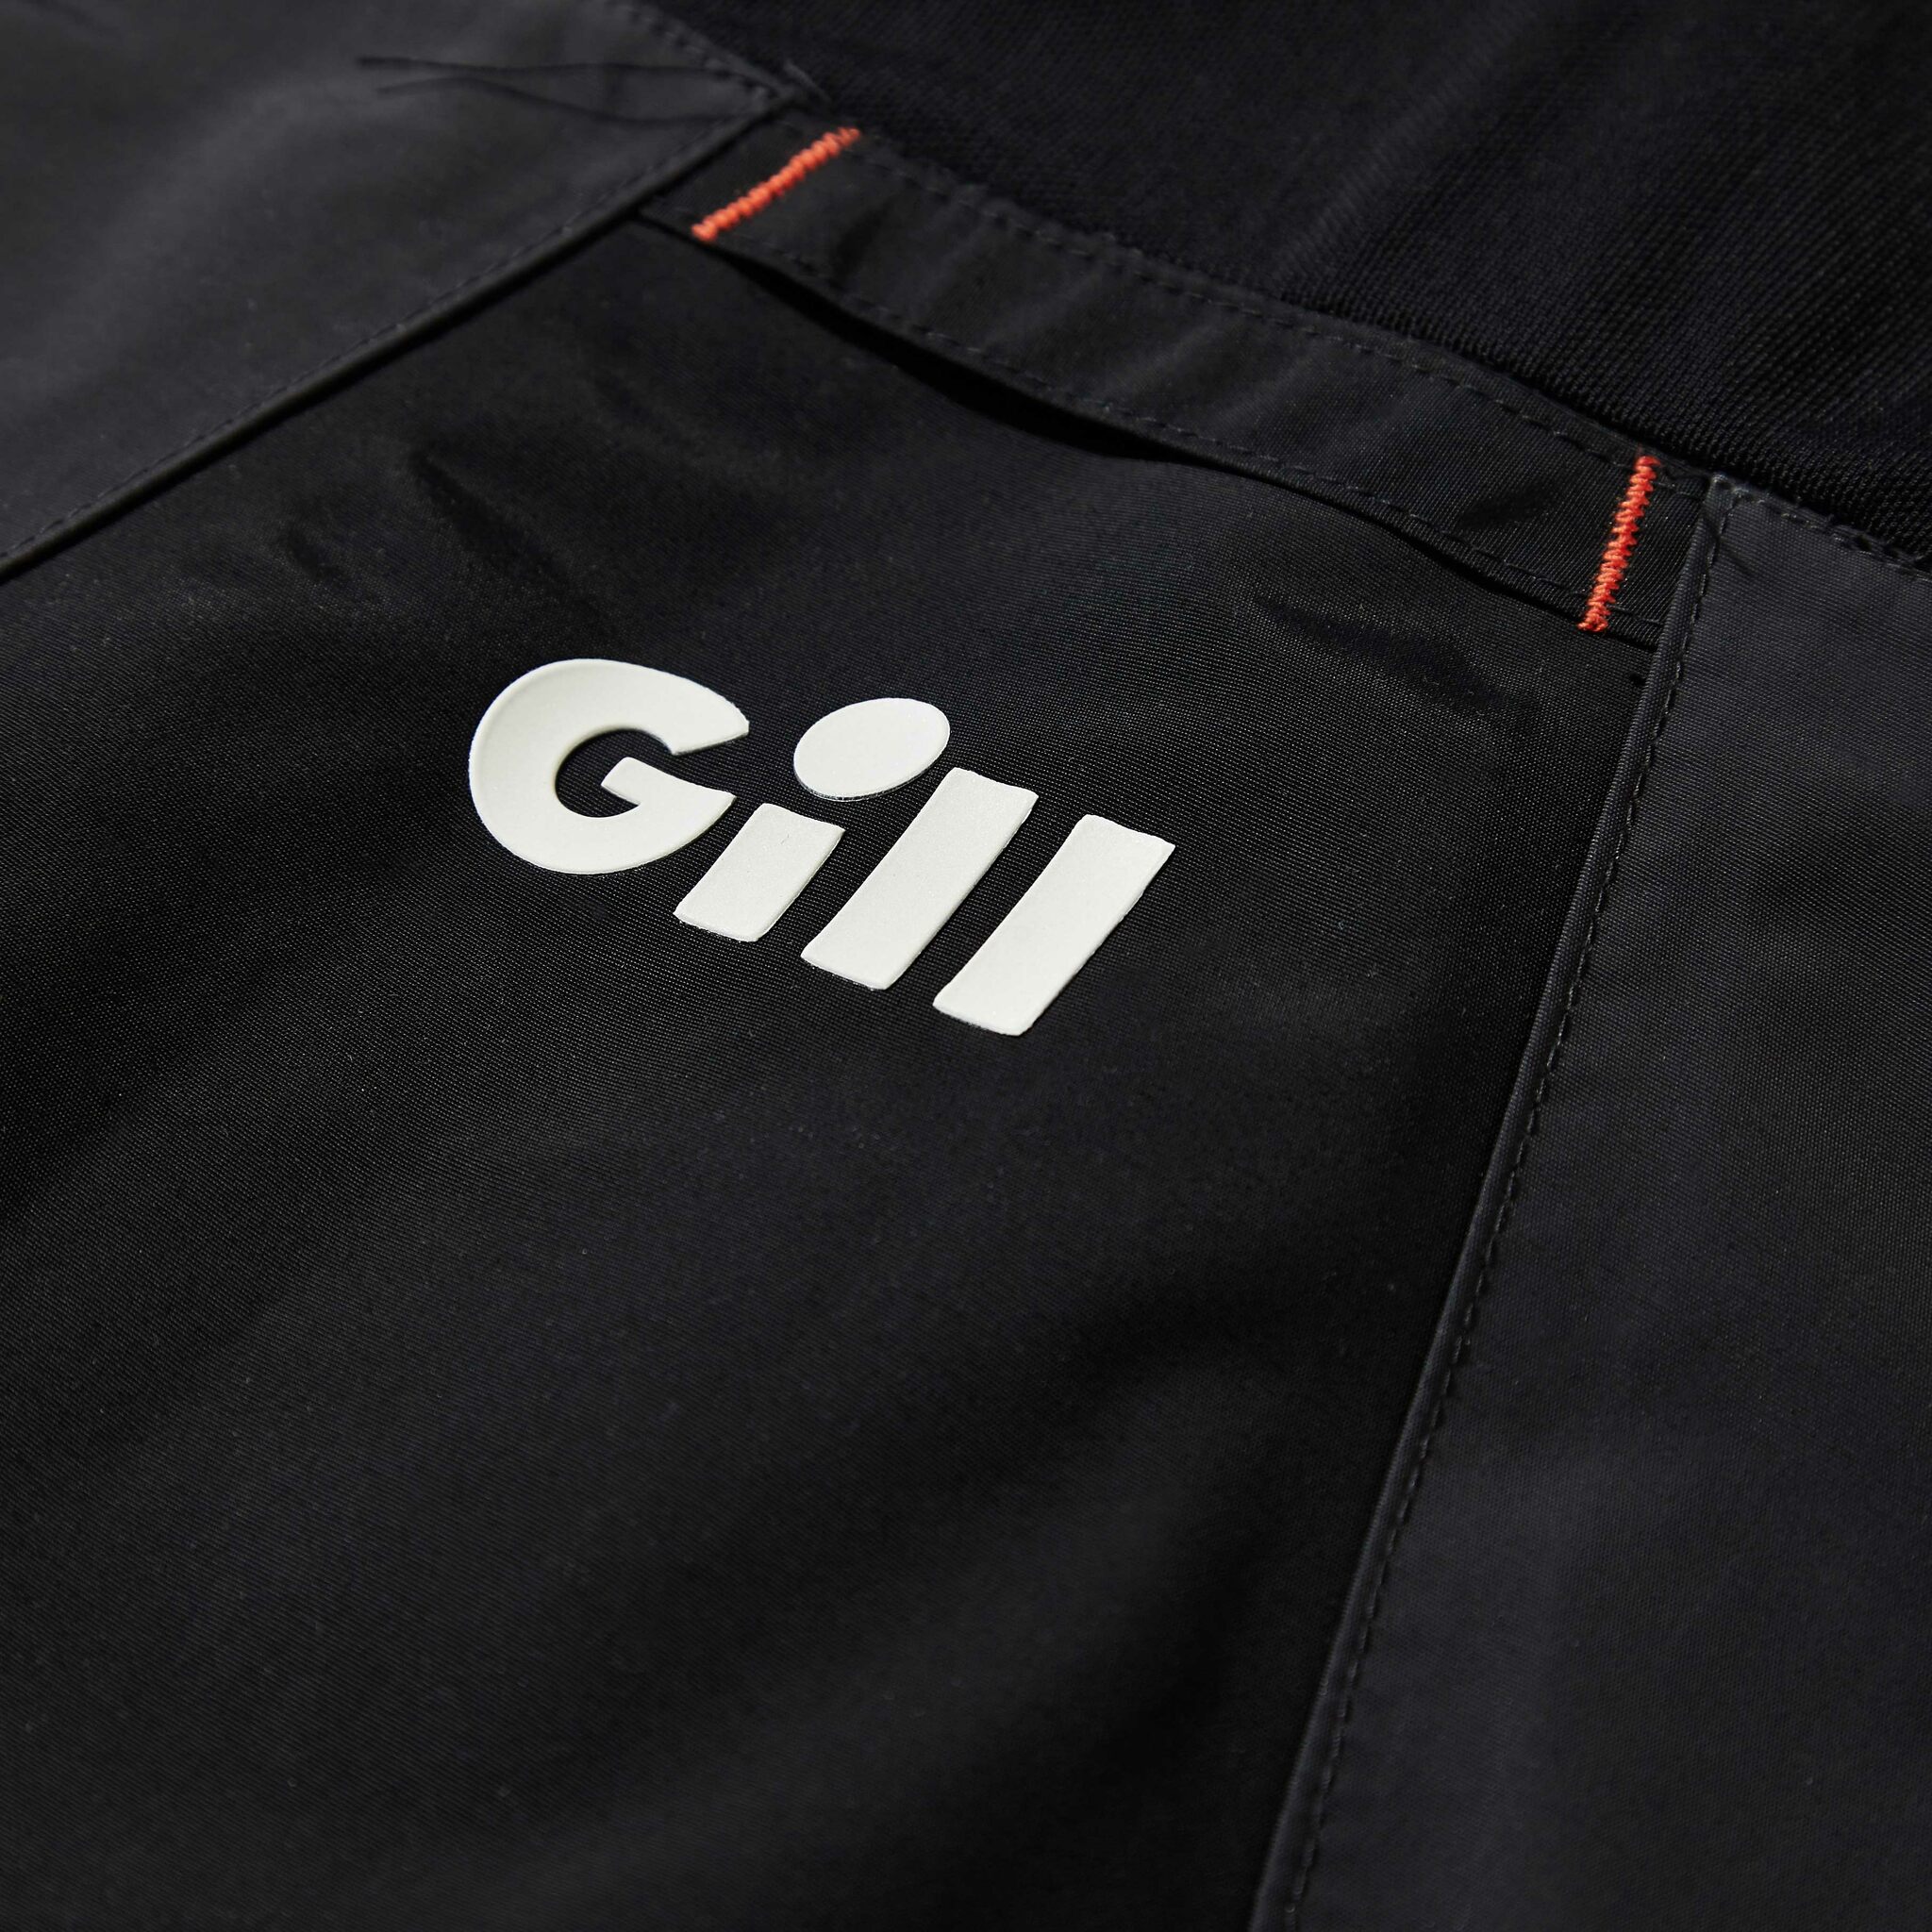 Gill Coastal pants RACE FUSION for men and women, salopette